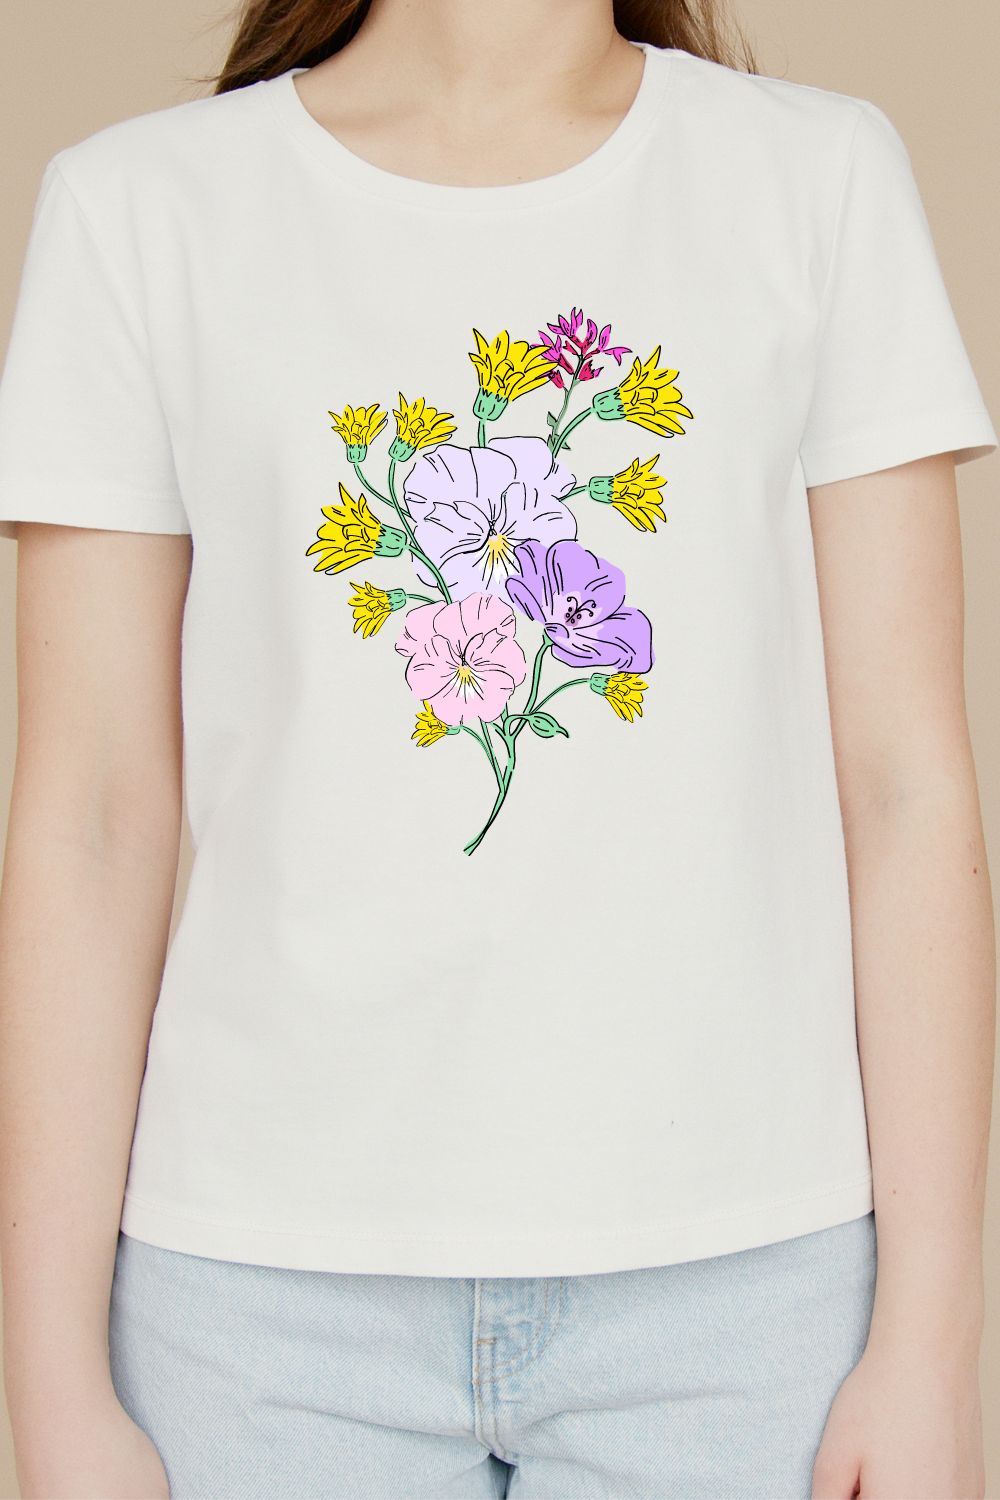 Flowers T Shirt Design pinterest preview image.